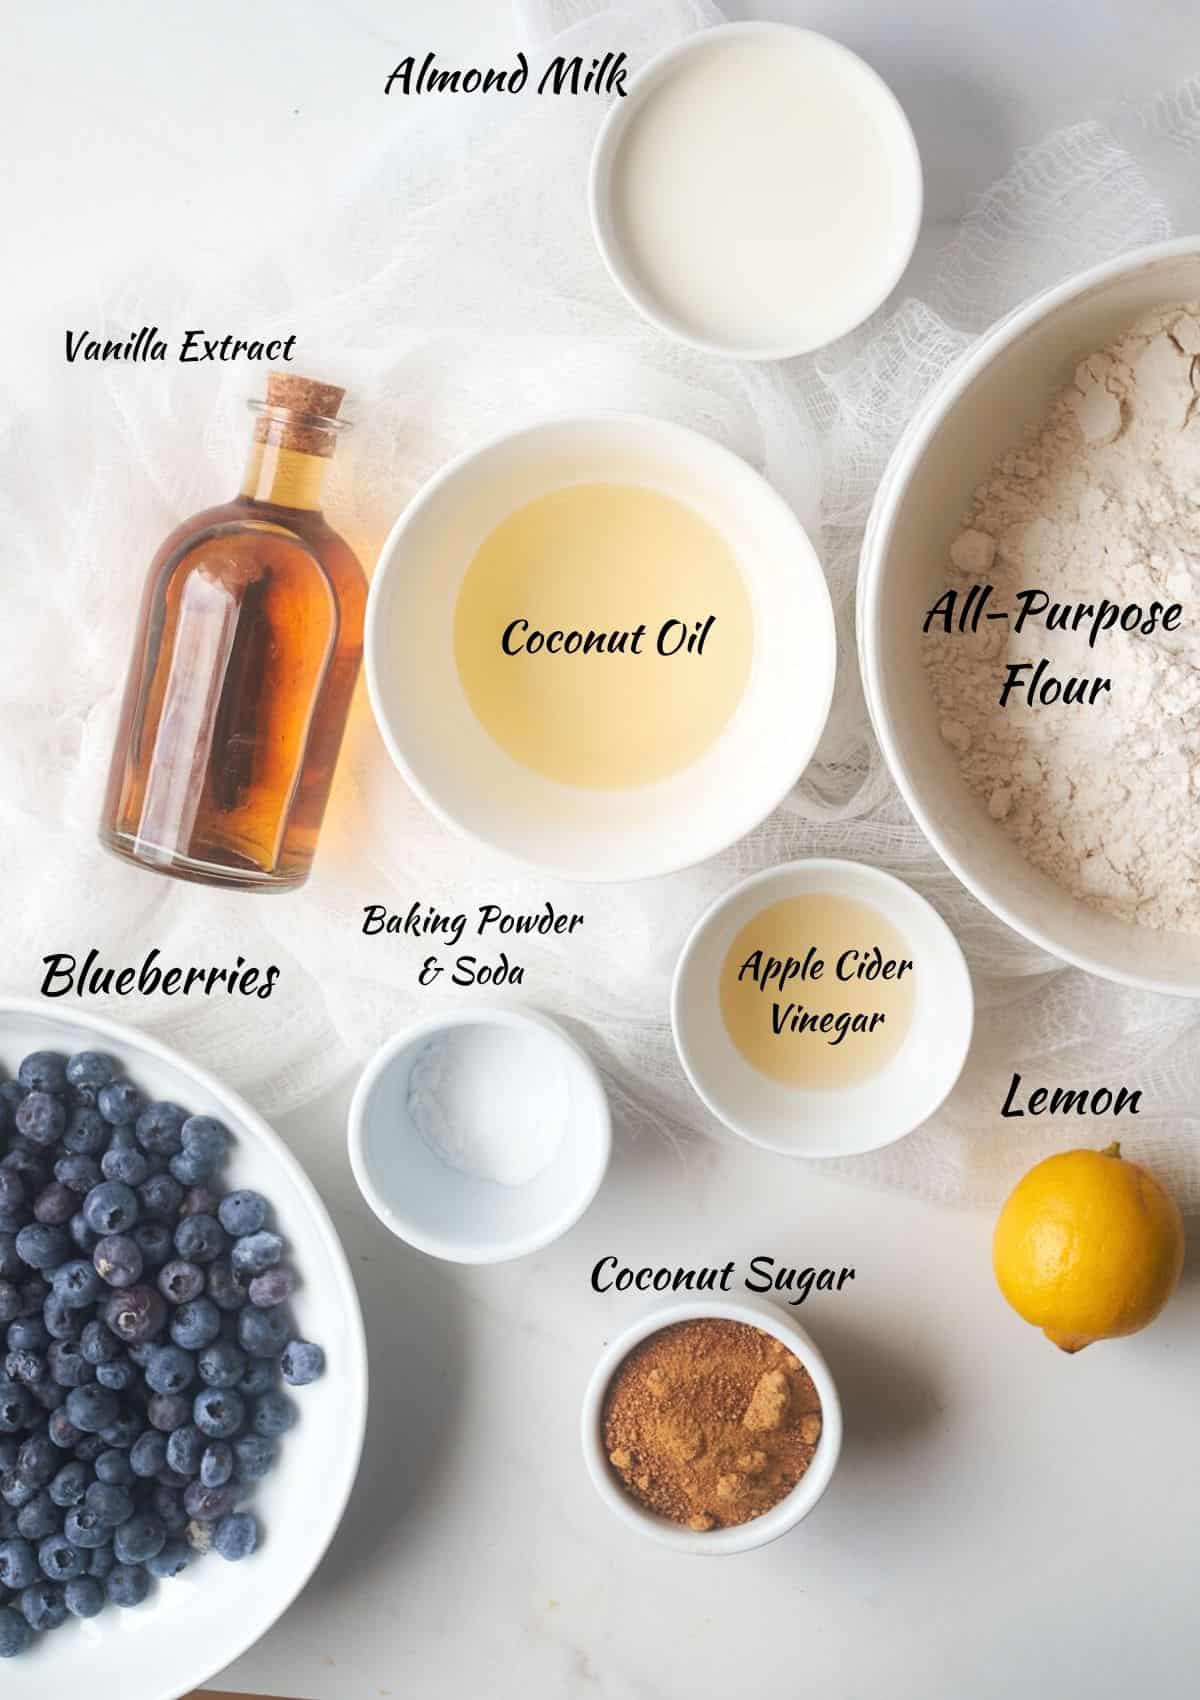 Blueberry Cake Ingredients: Almond milk, all-purpose flour, coconut oil, vanilla extract, blueberries, baking powder, baking soda, apple cider vinegar, lemon, coconut sugar.